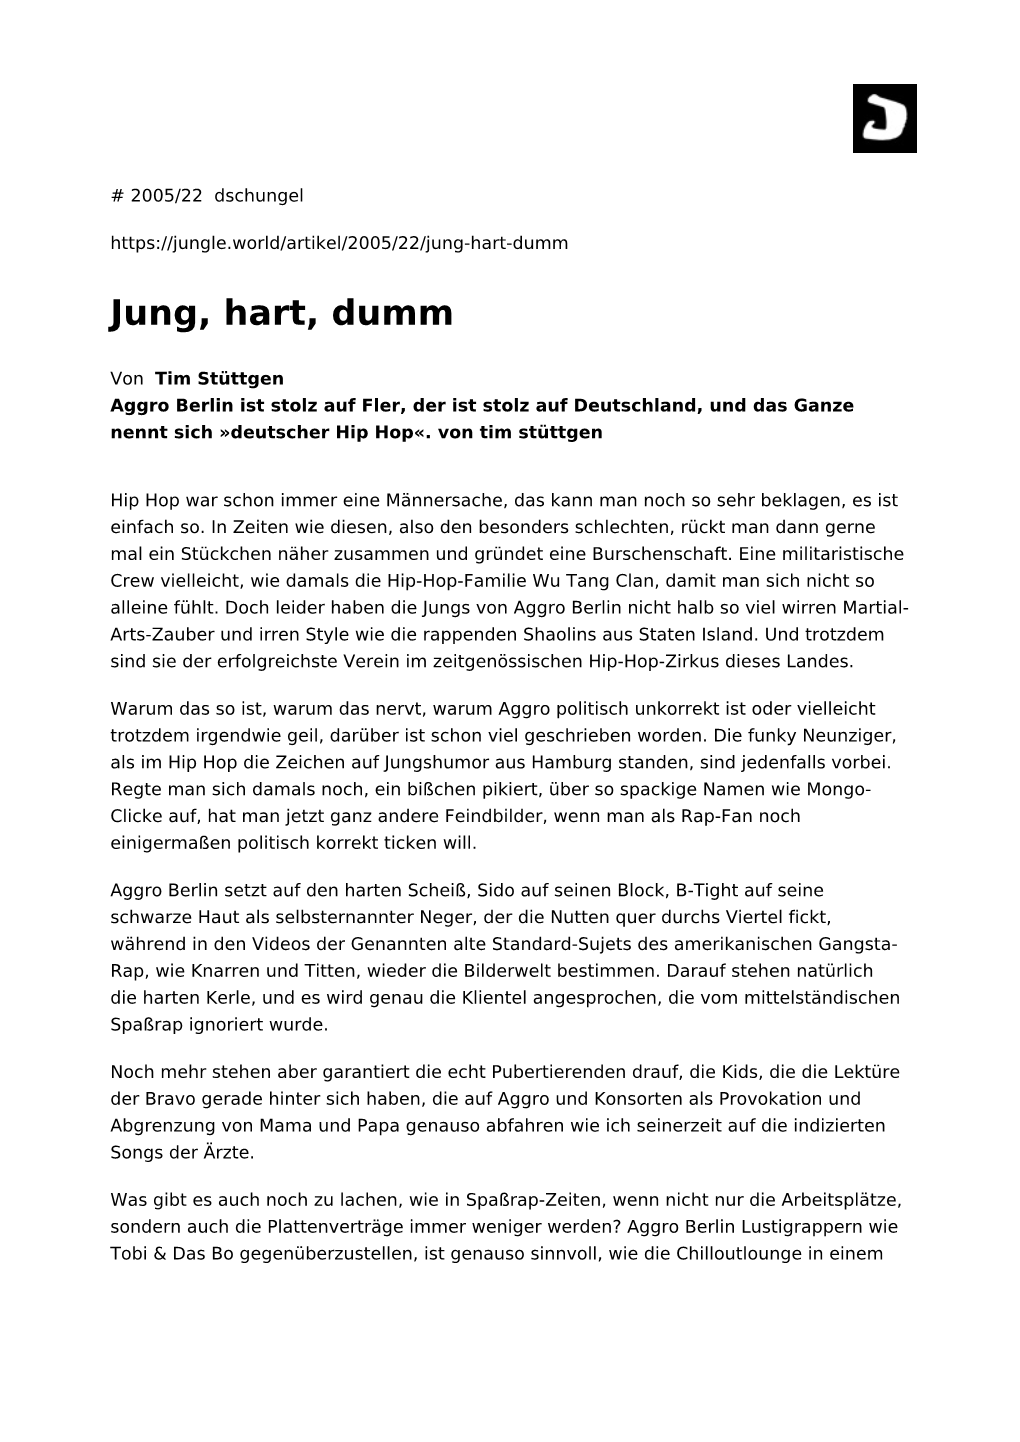 Jung, Hart, Dumm